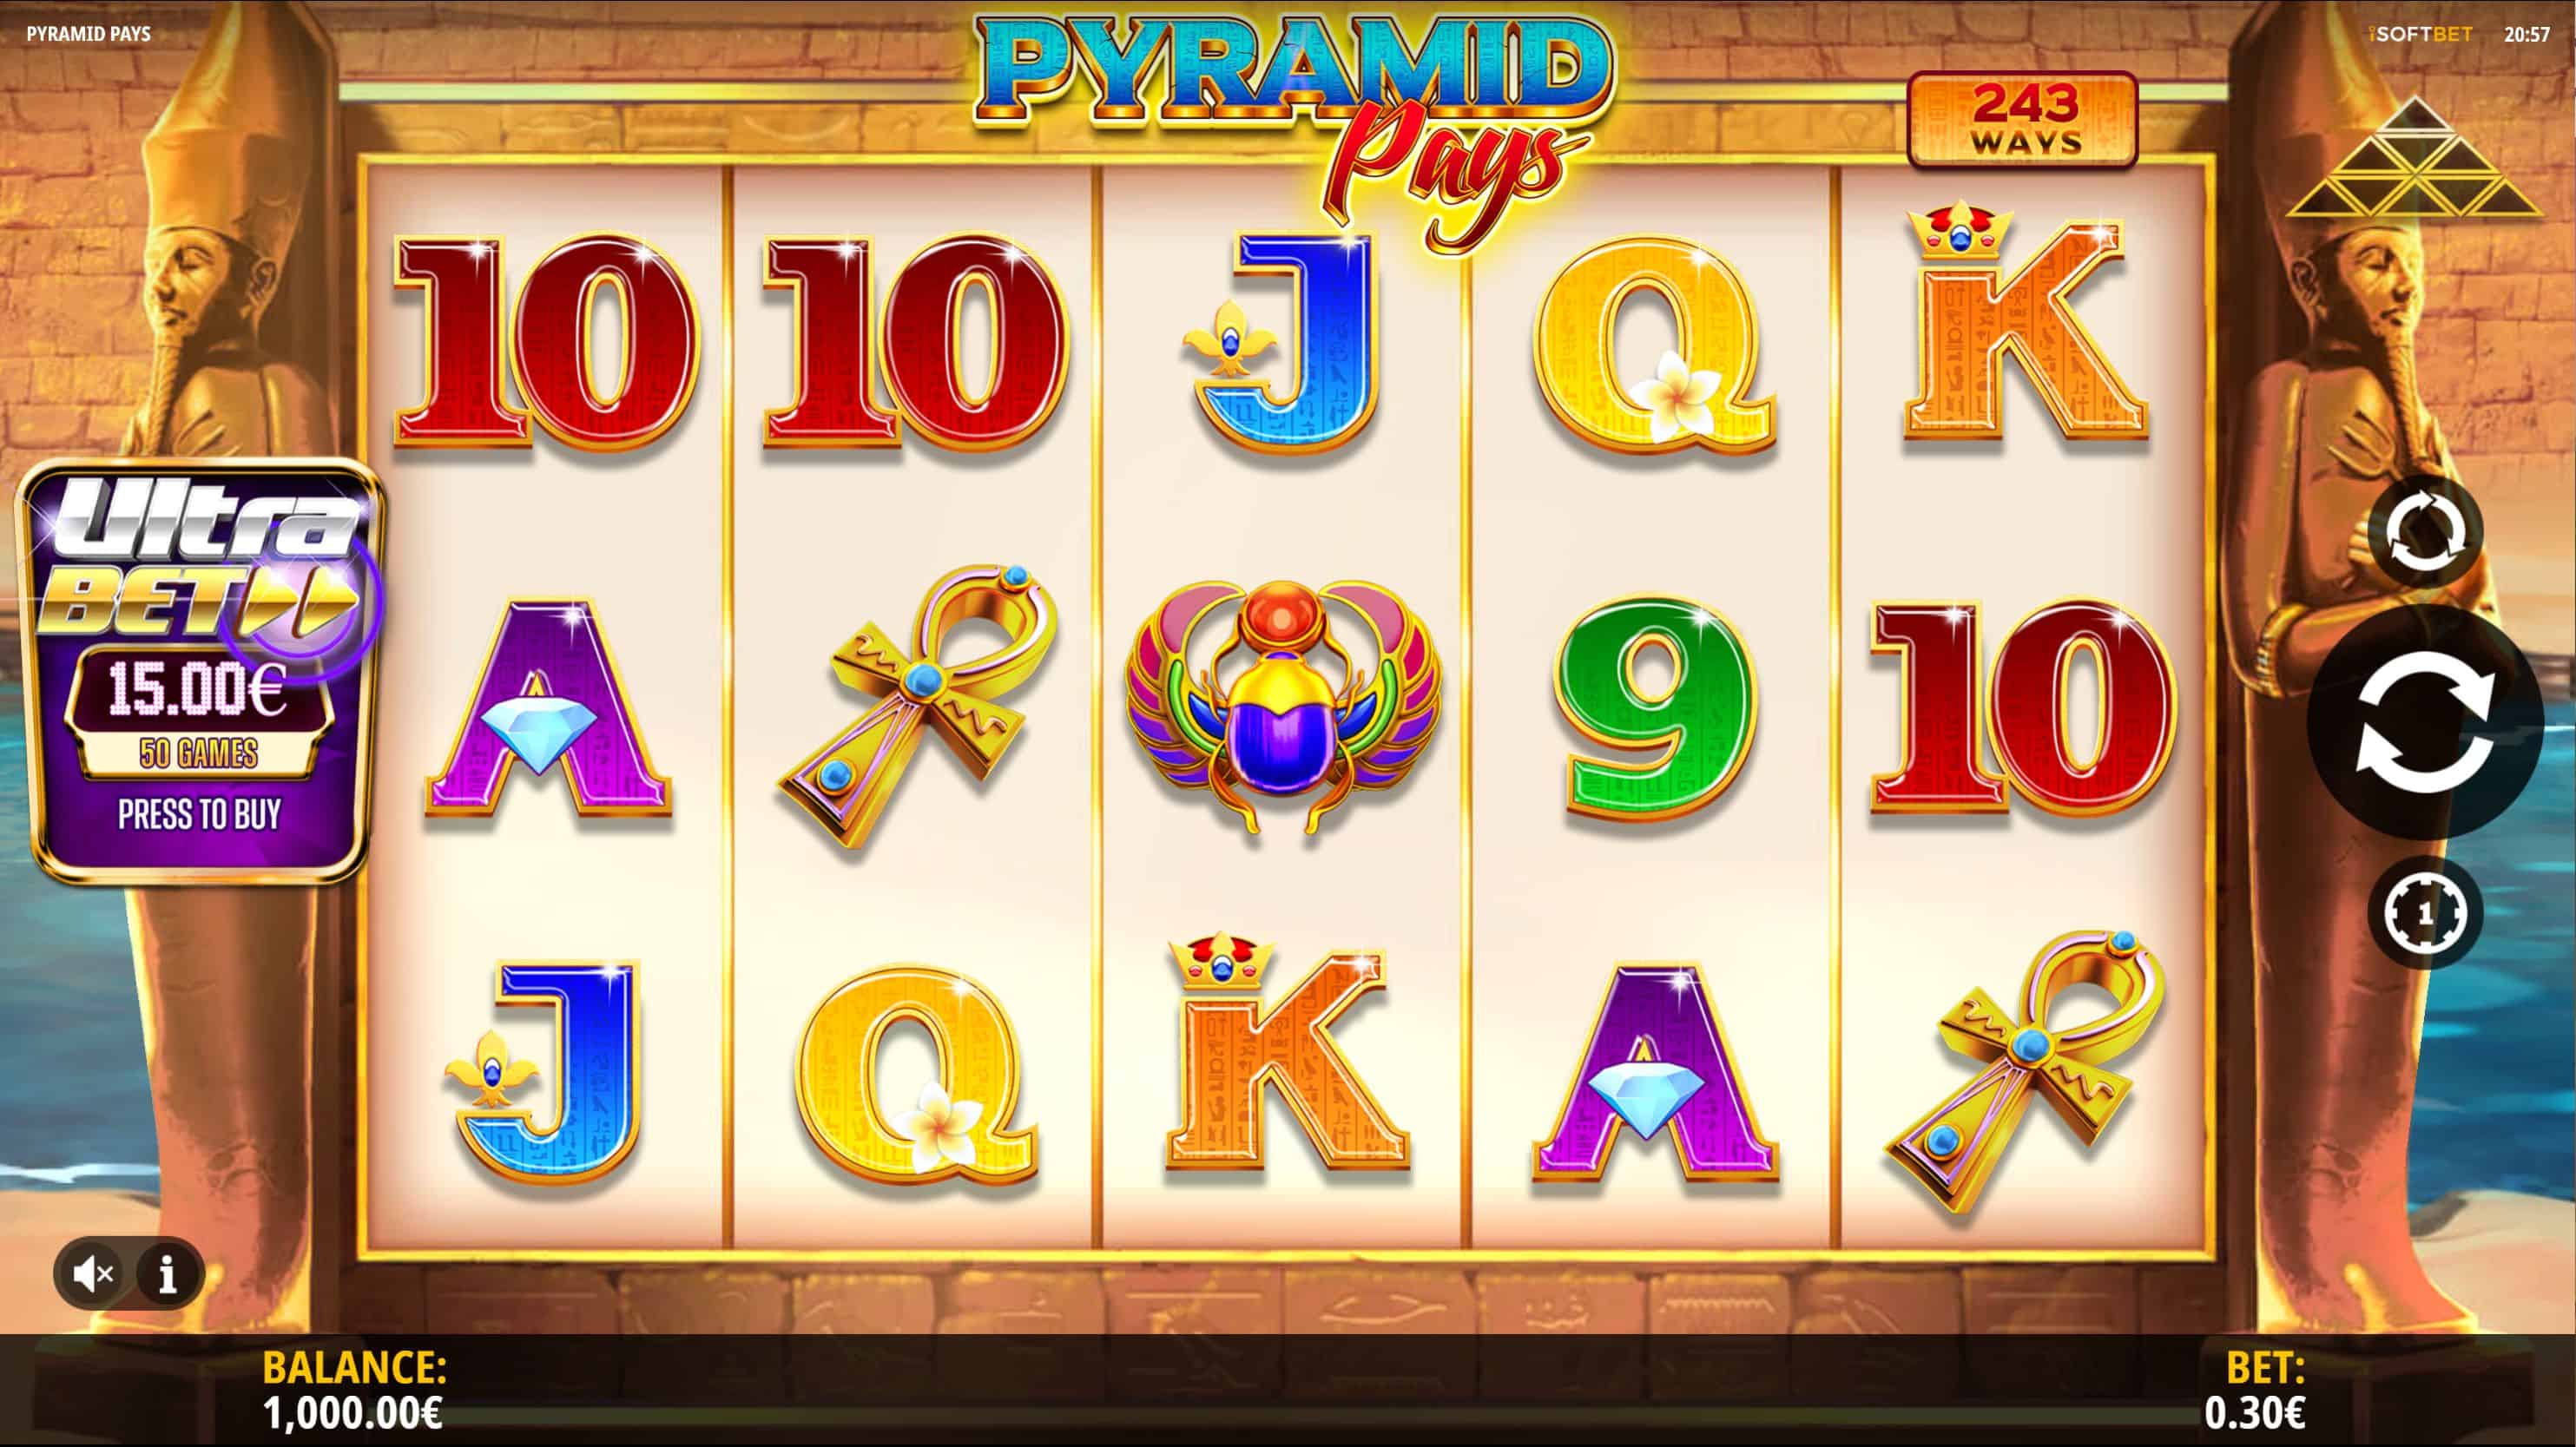 Pyramid Pays Slot Game Free Play at Casino Ireland 01